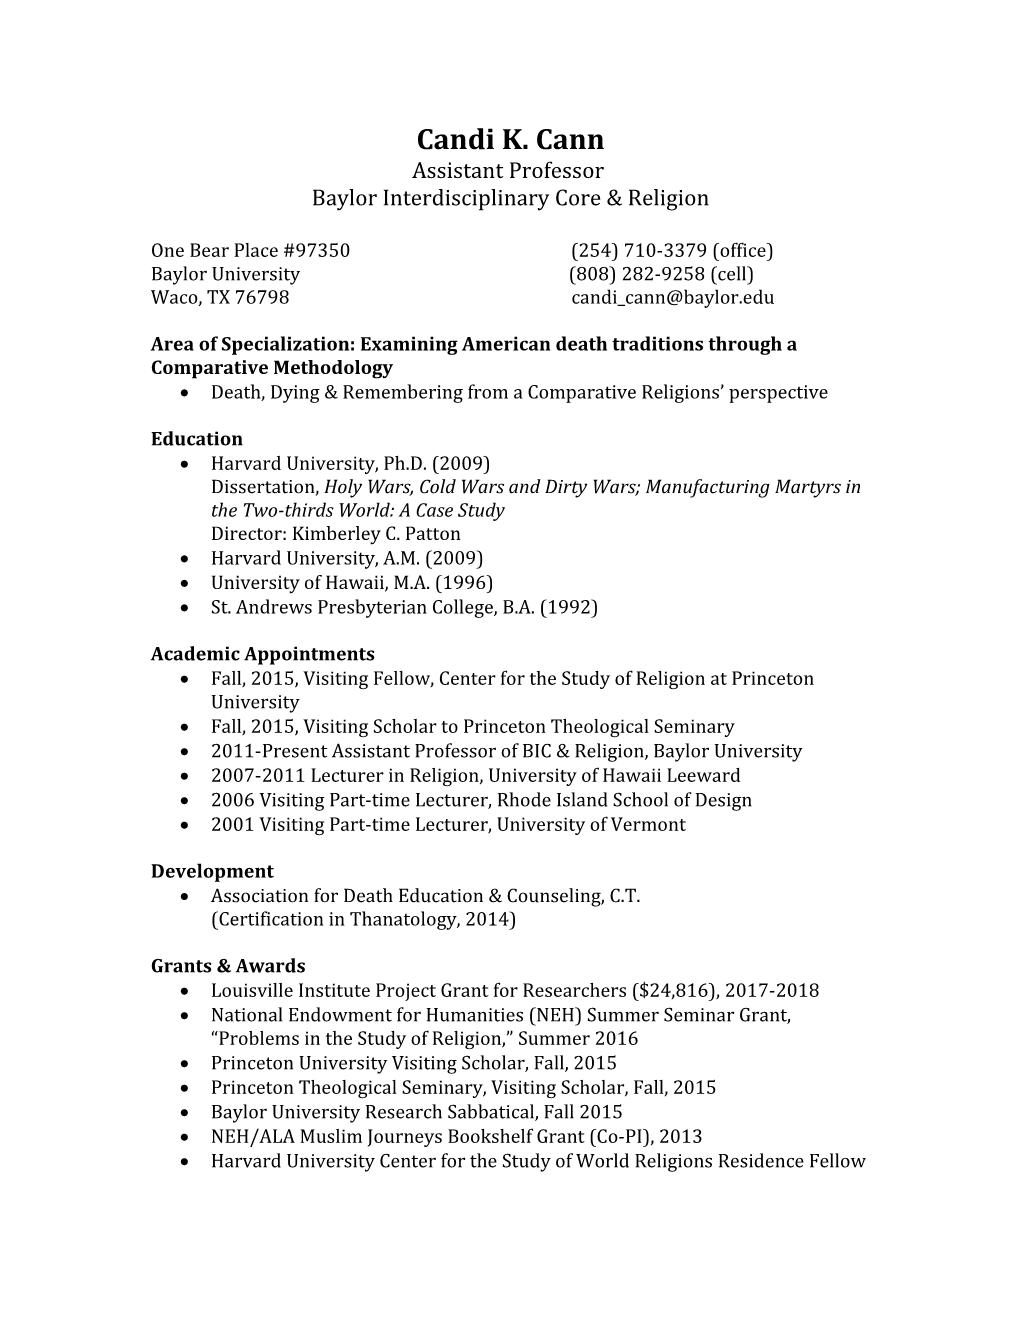 Baylor Interdisciplinary Core & Religion